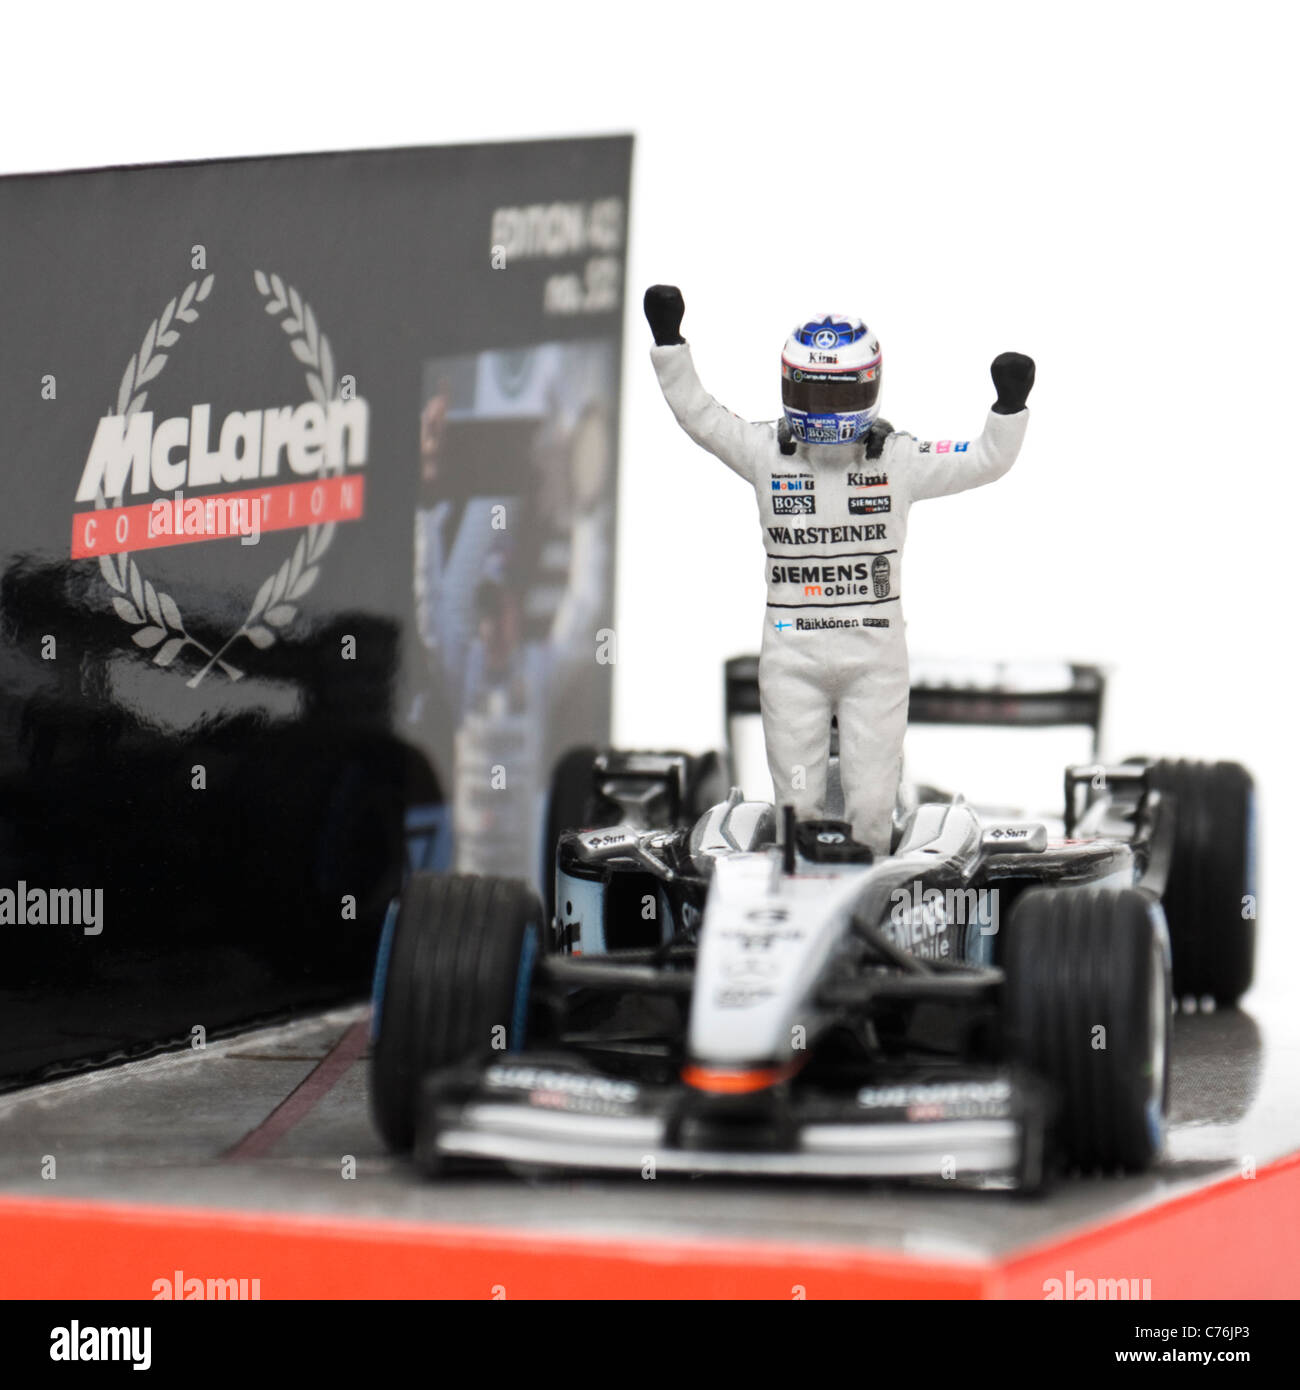 Modelo a escala 1:43 de Kimi Raikkonen celebra su primera victoria de Gran Premio de F1 en Malasia el 23 de marzo de 2003 Foto de stock